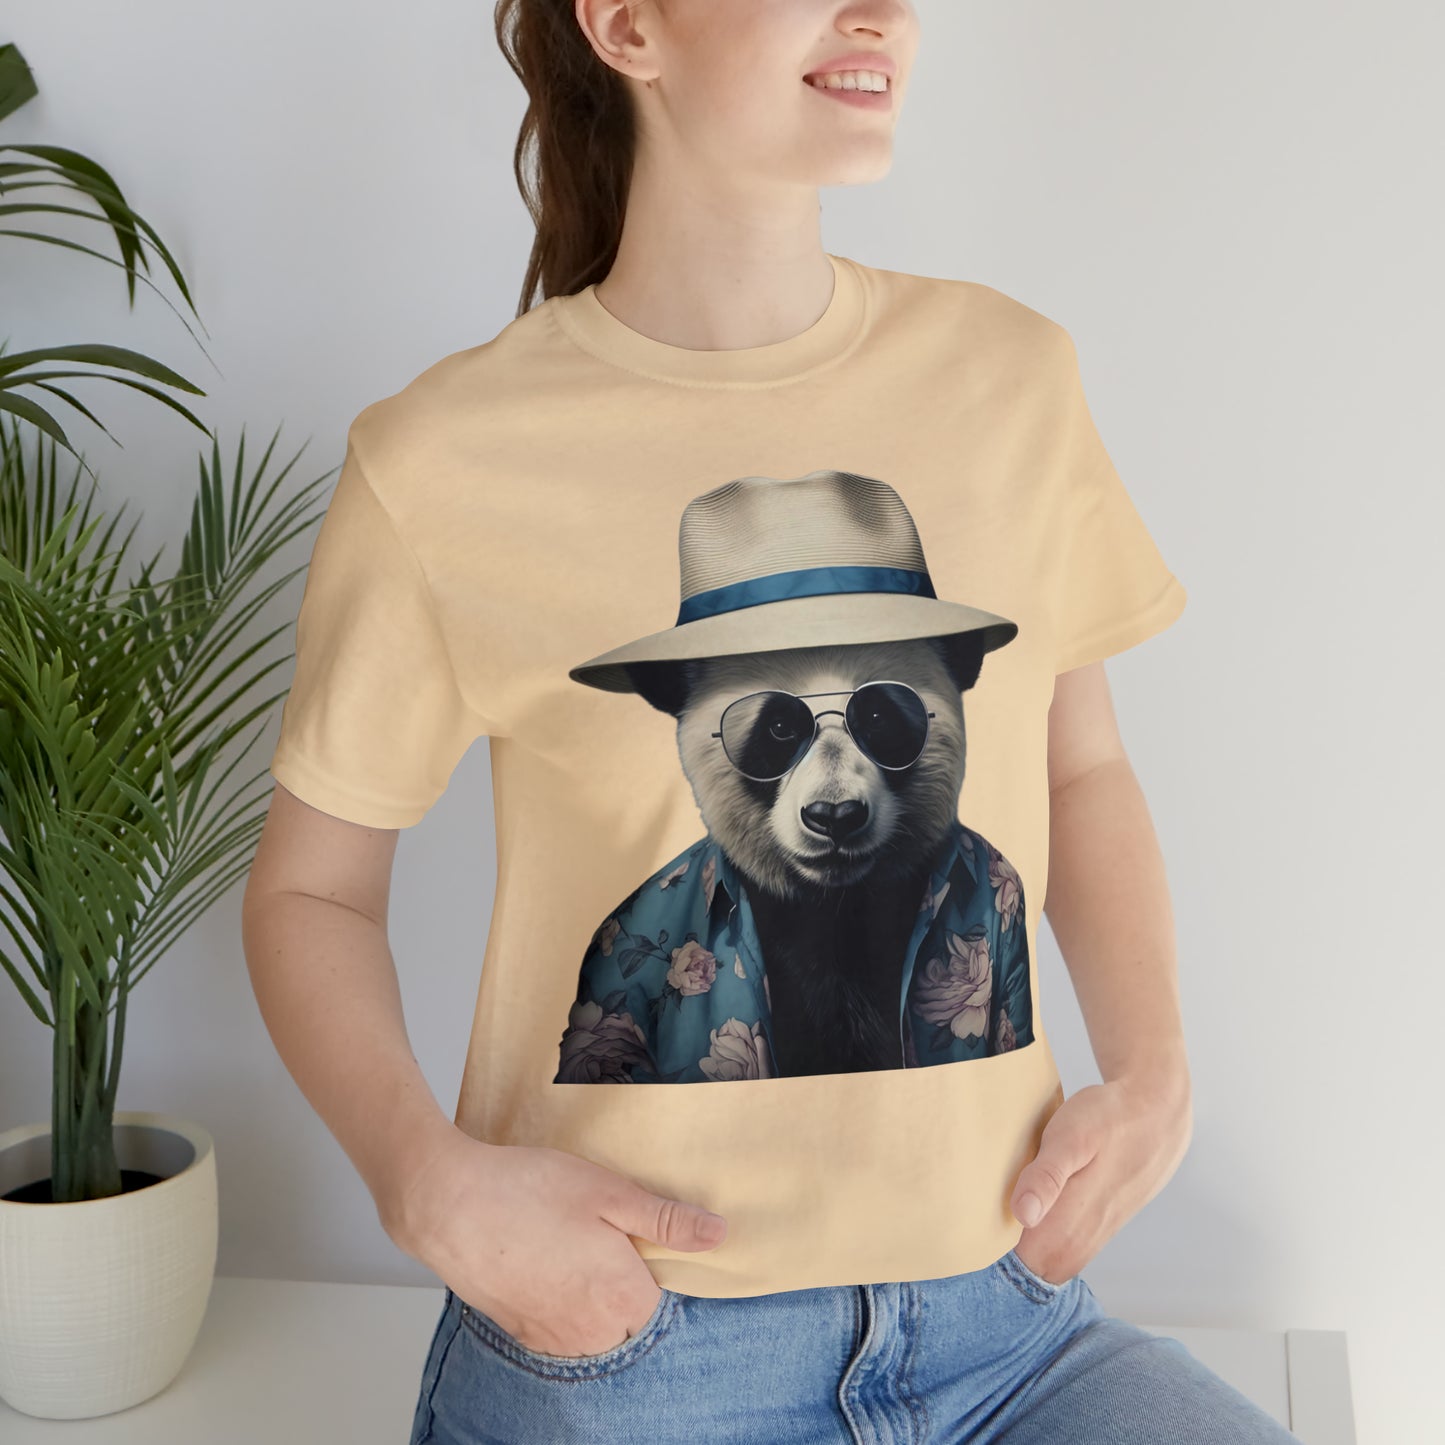 Panda Print Tee with Panda Wearing Sunglasses